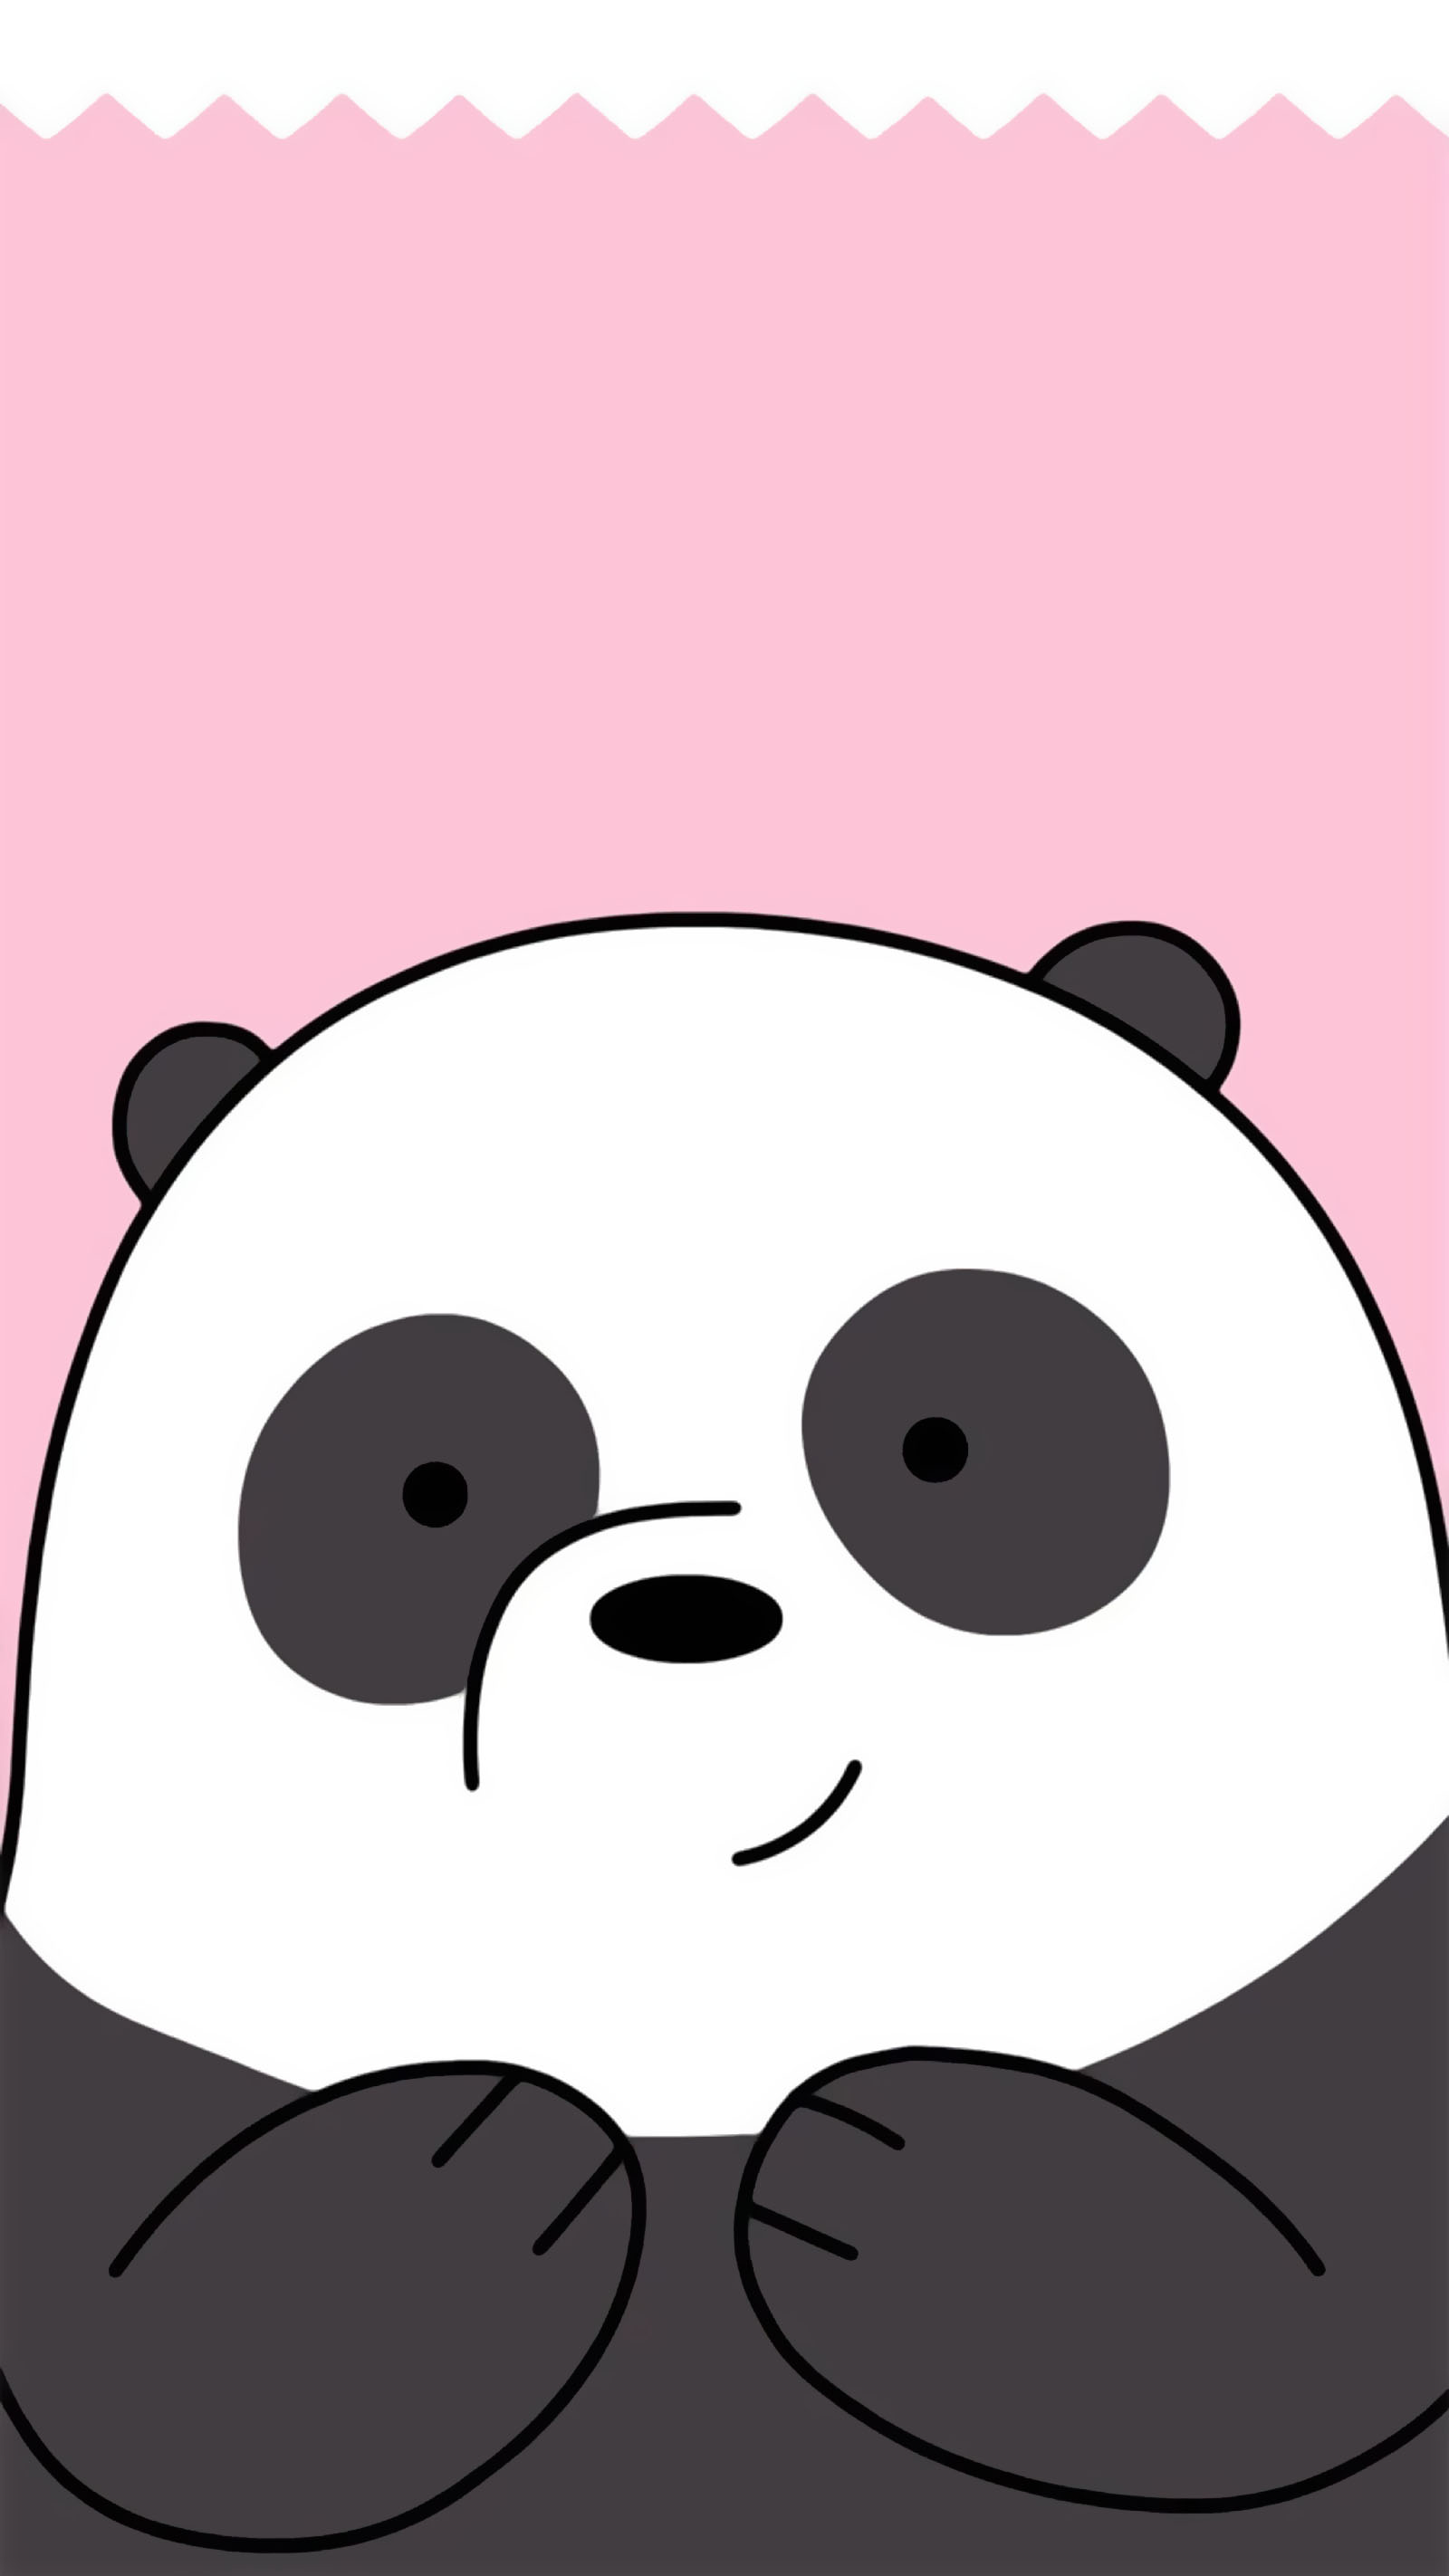 Hình nền gấu trúc Panda cute nhất